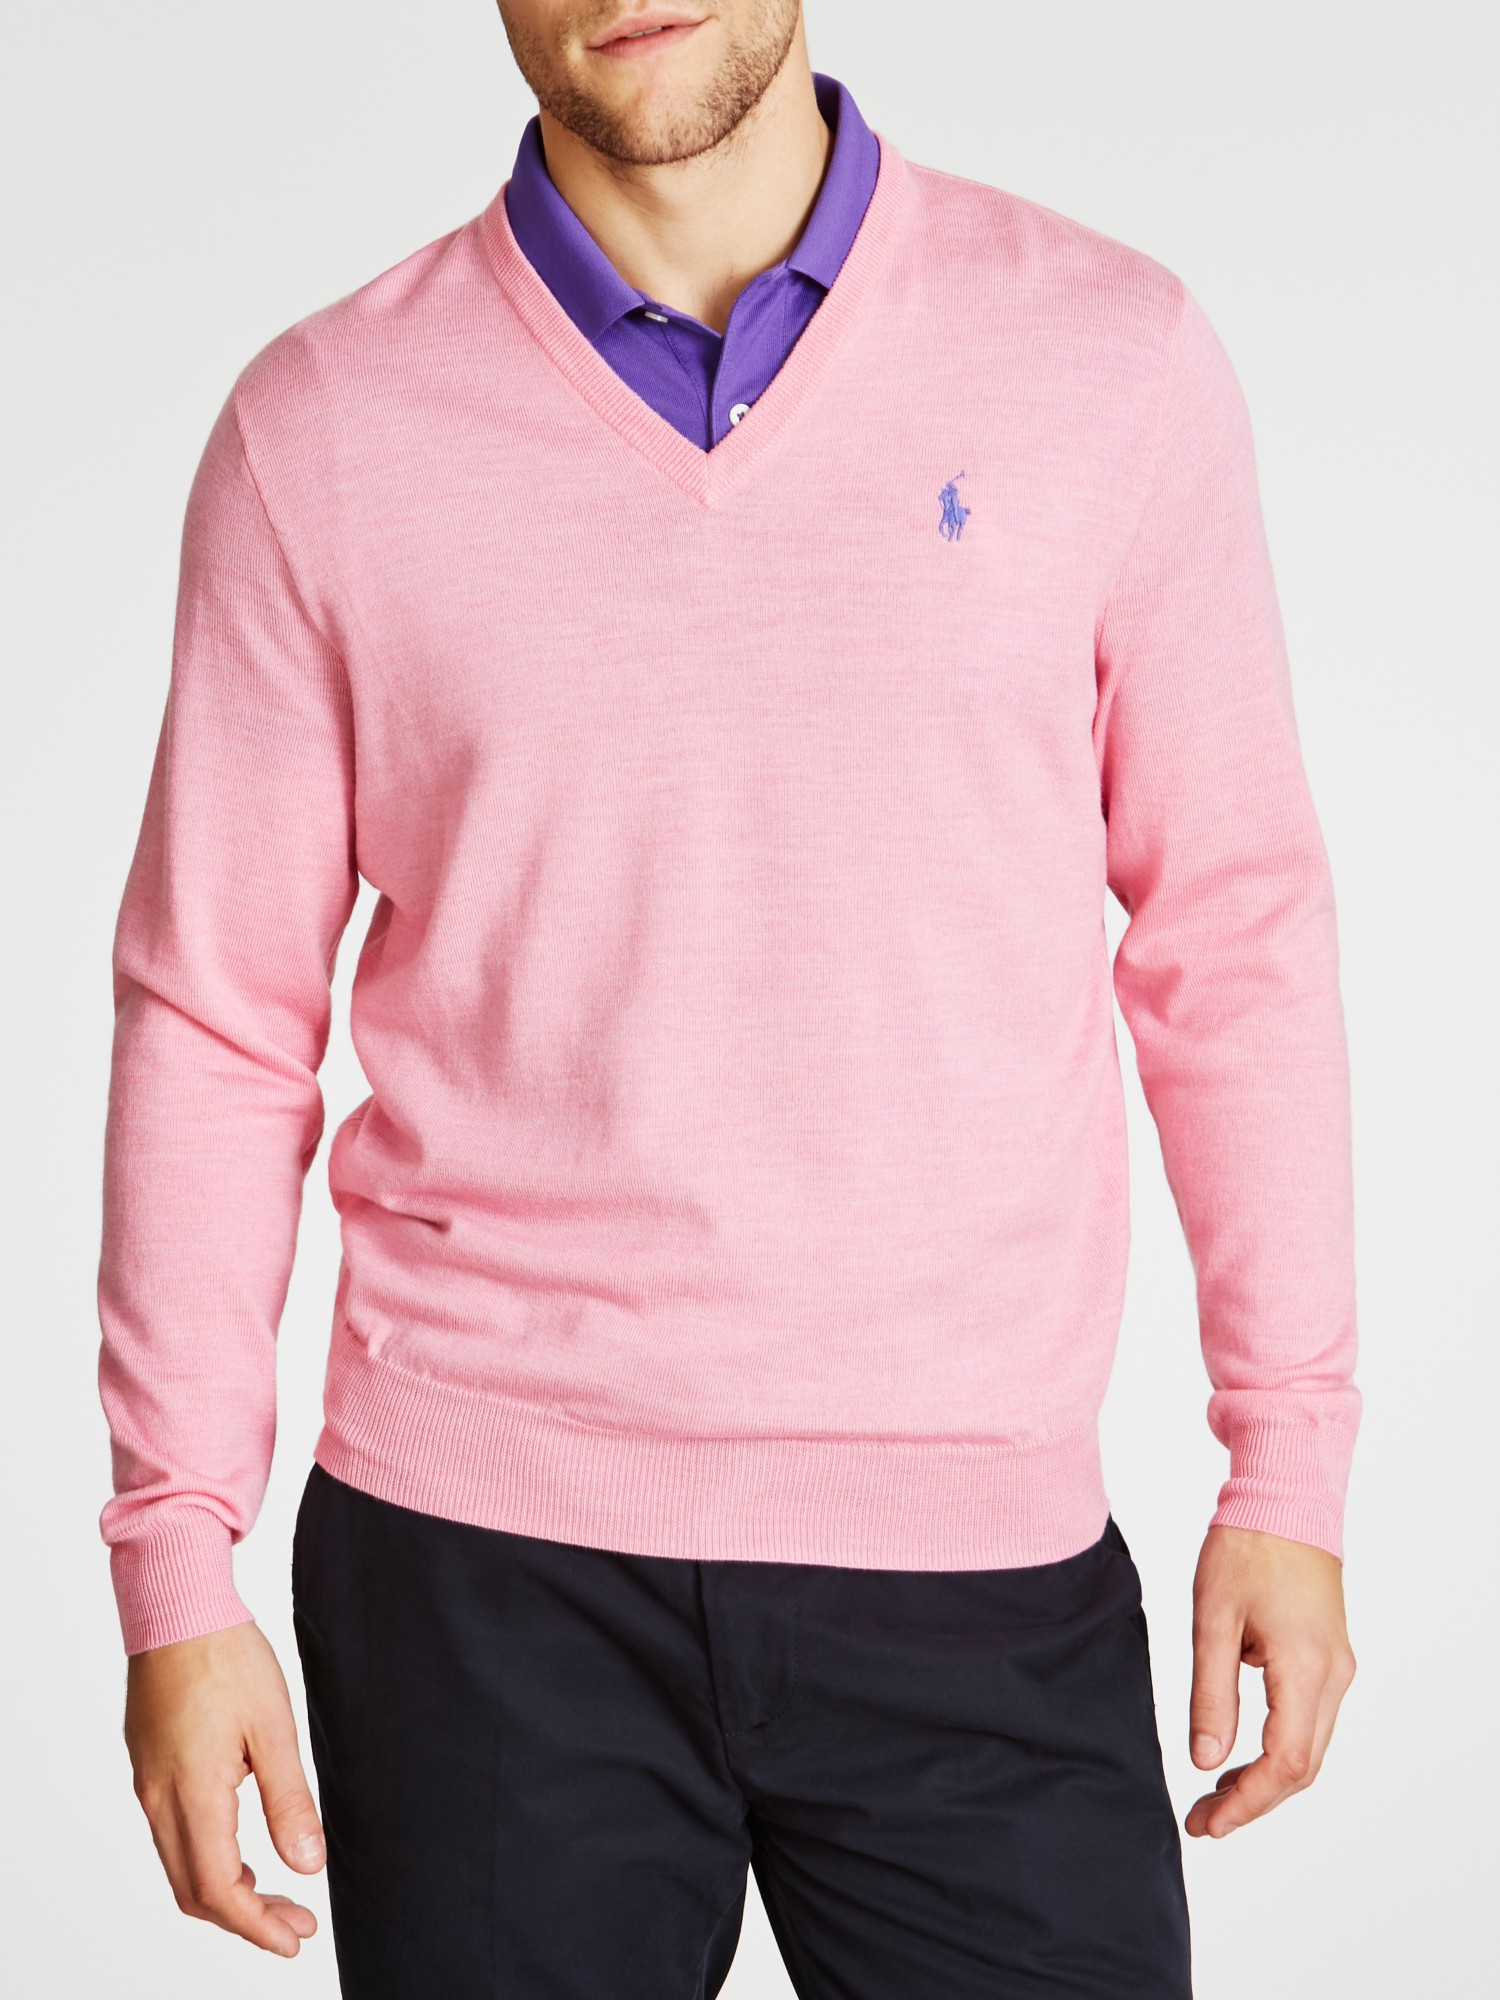 Polo Ralph Lauren Wool V-neck Jumper in Pink for Men - Lyst